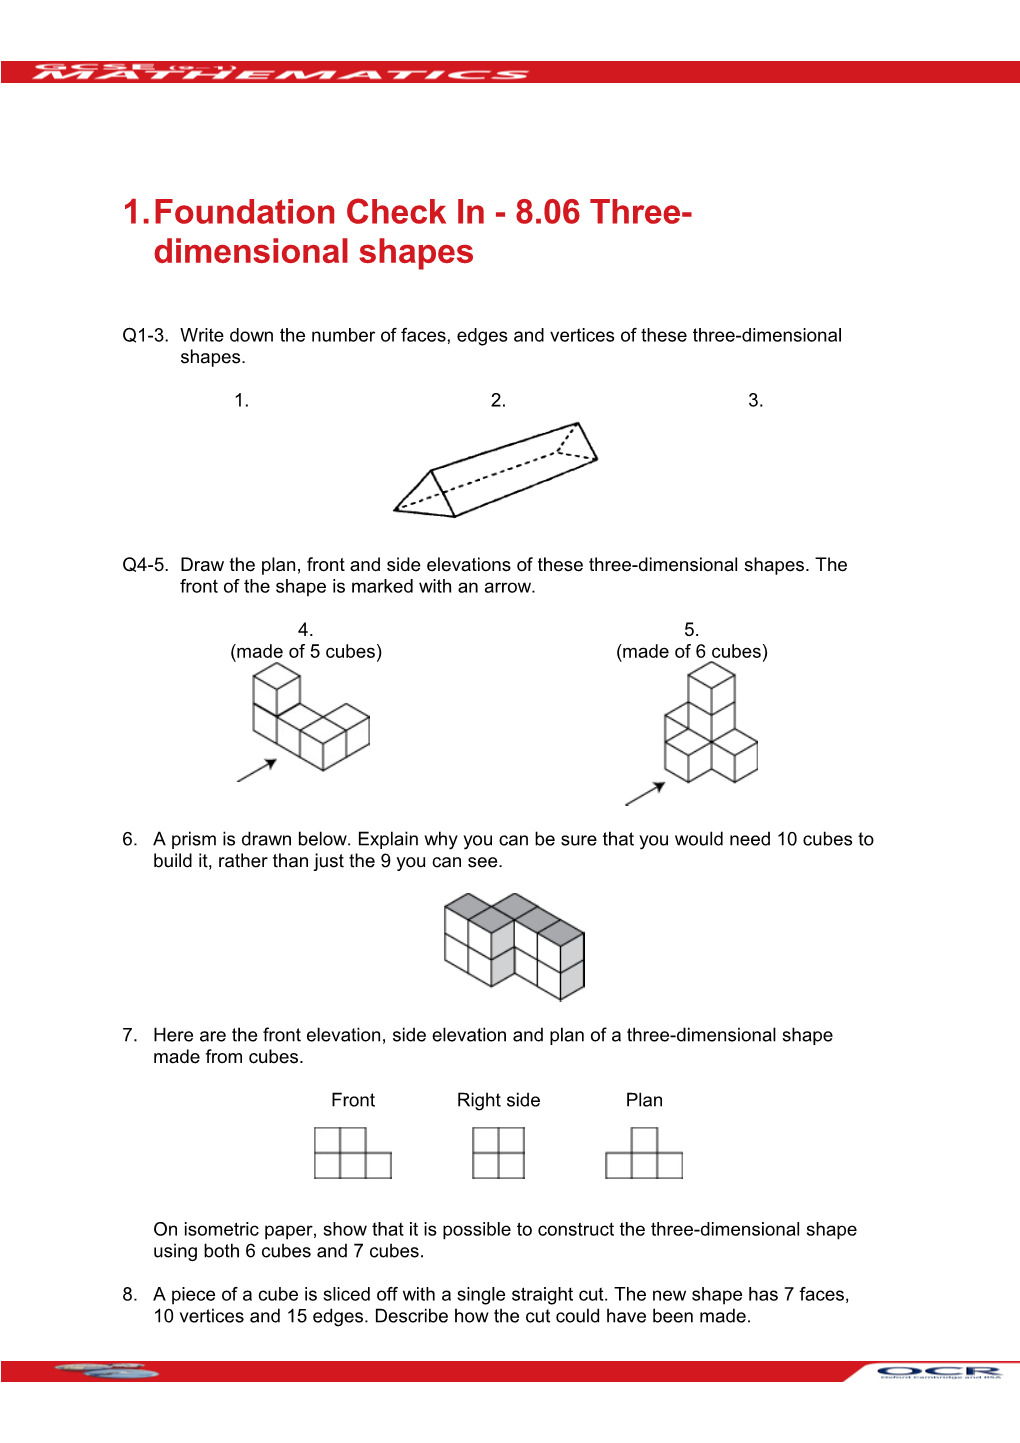 GCSE (9-1) Mathematics Foundation Check in - 8.06 Three-Dimensional Shapes